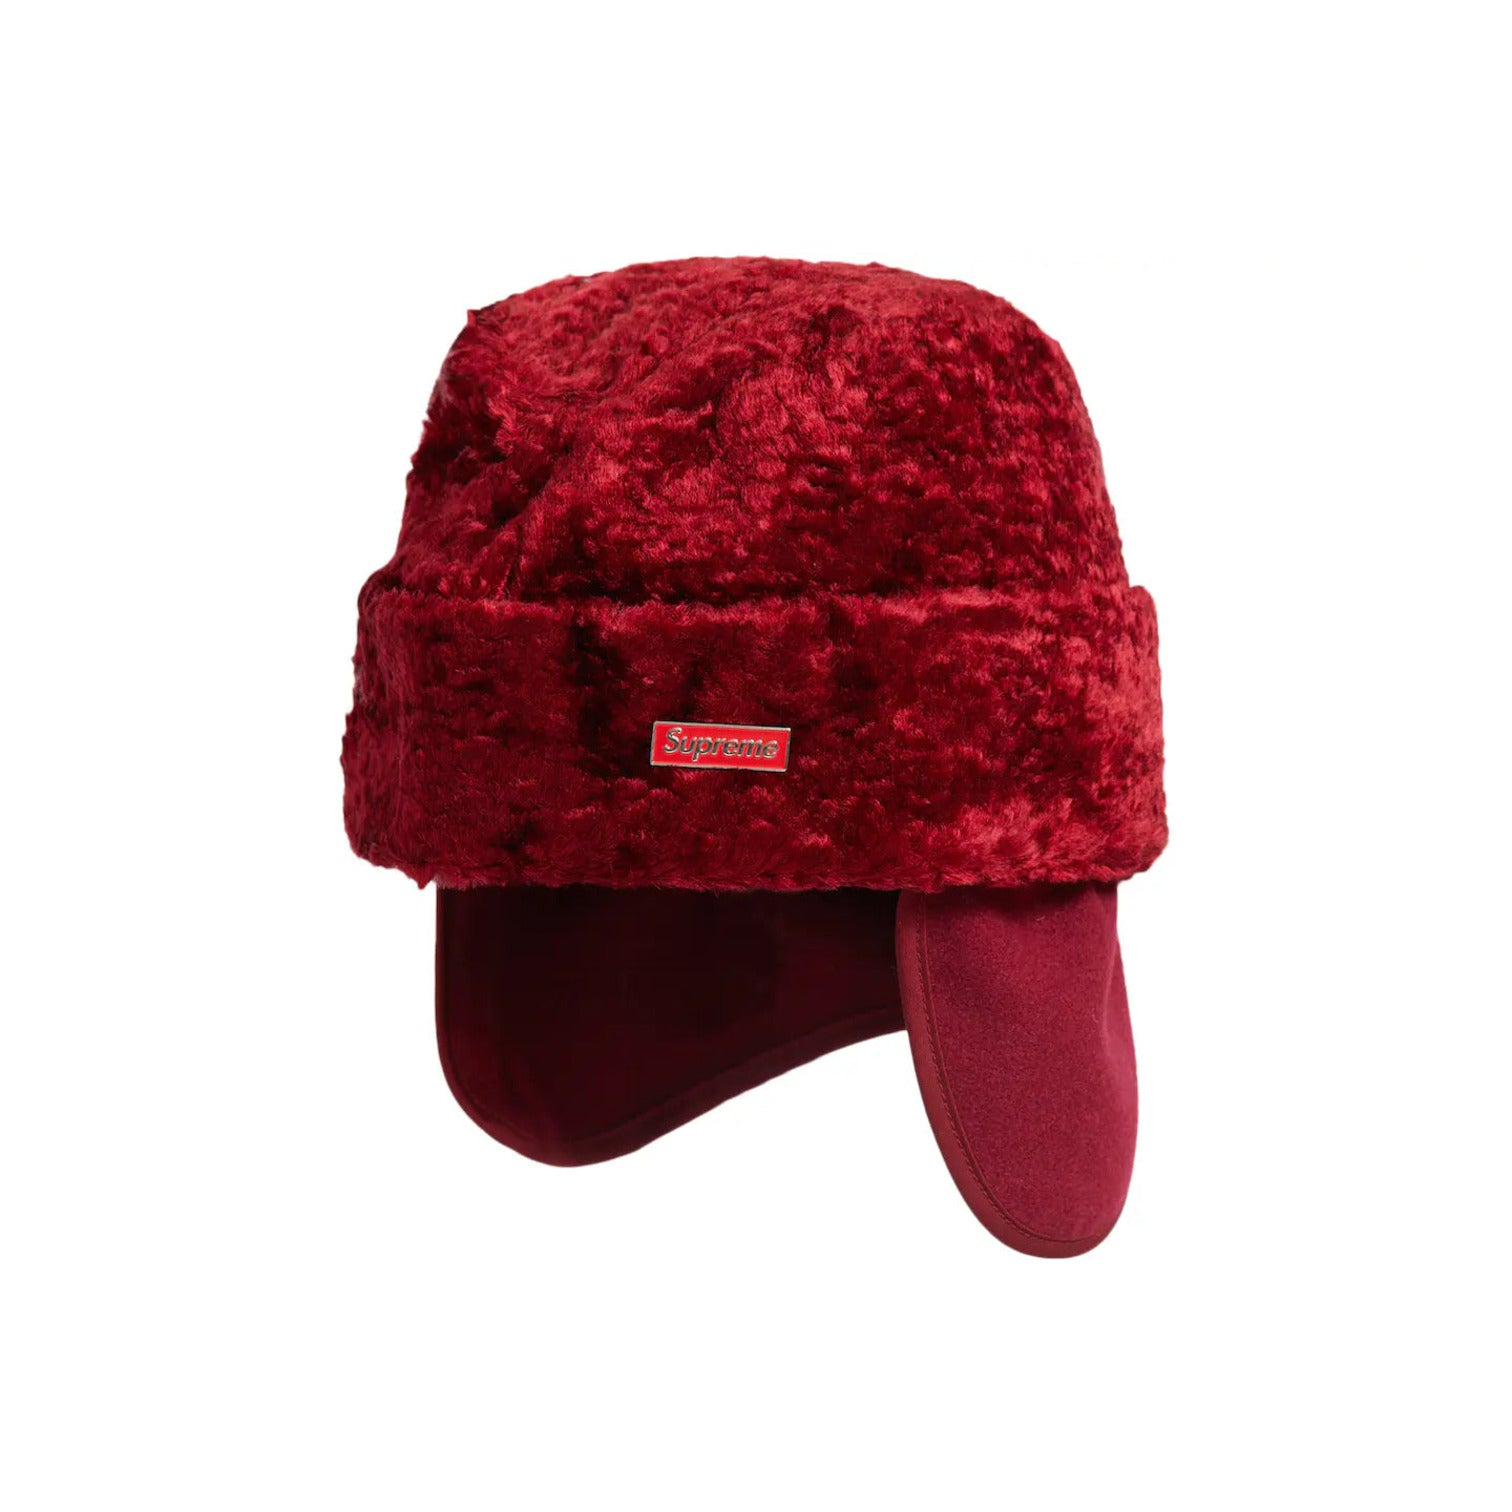 Supreme ambassador hat (red) FW21